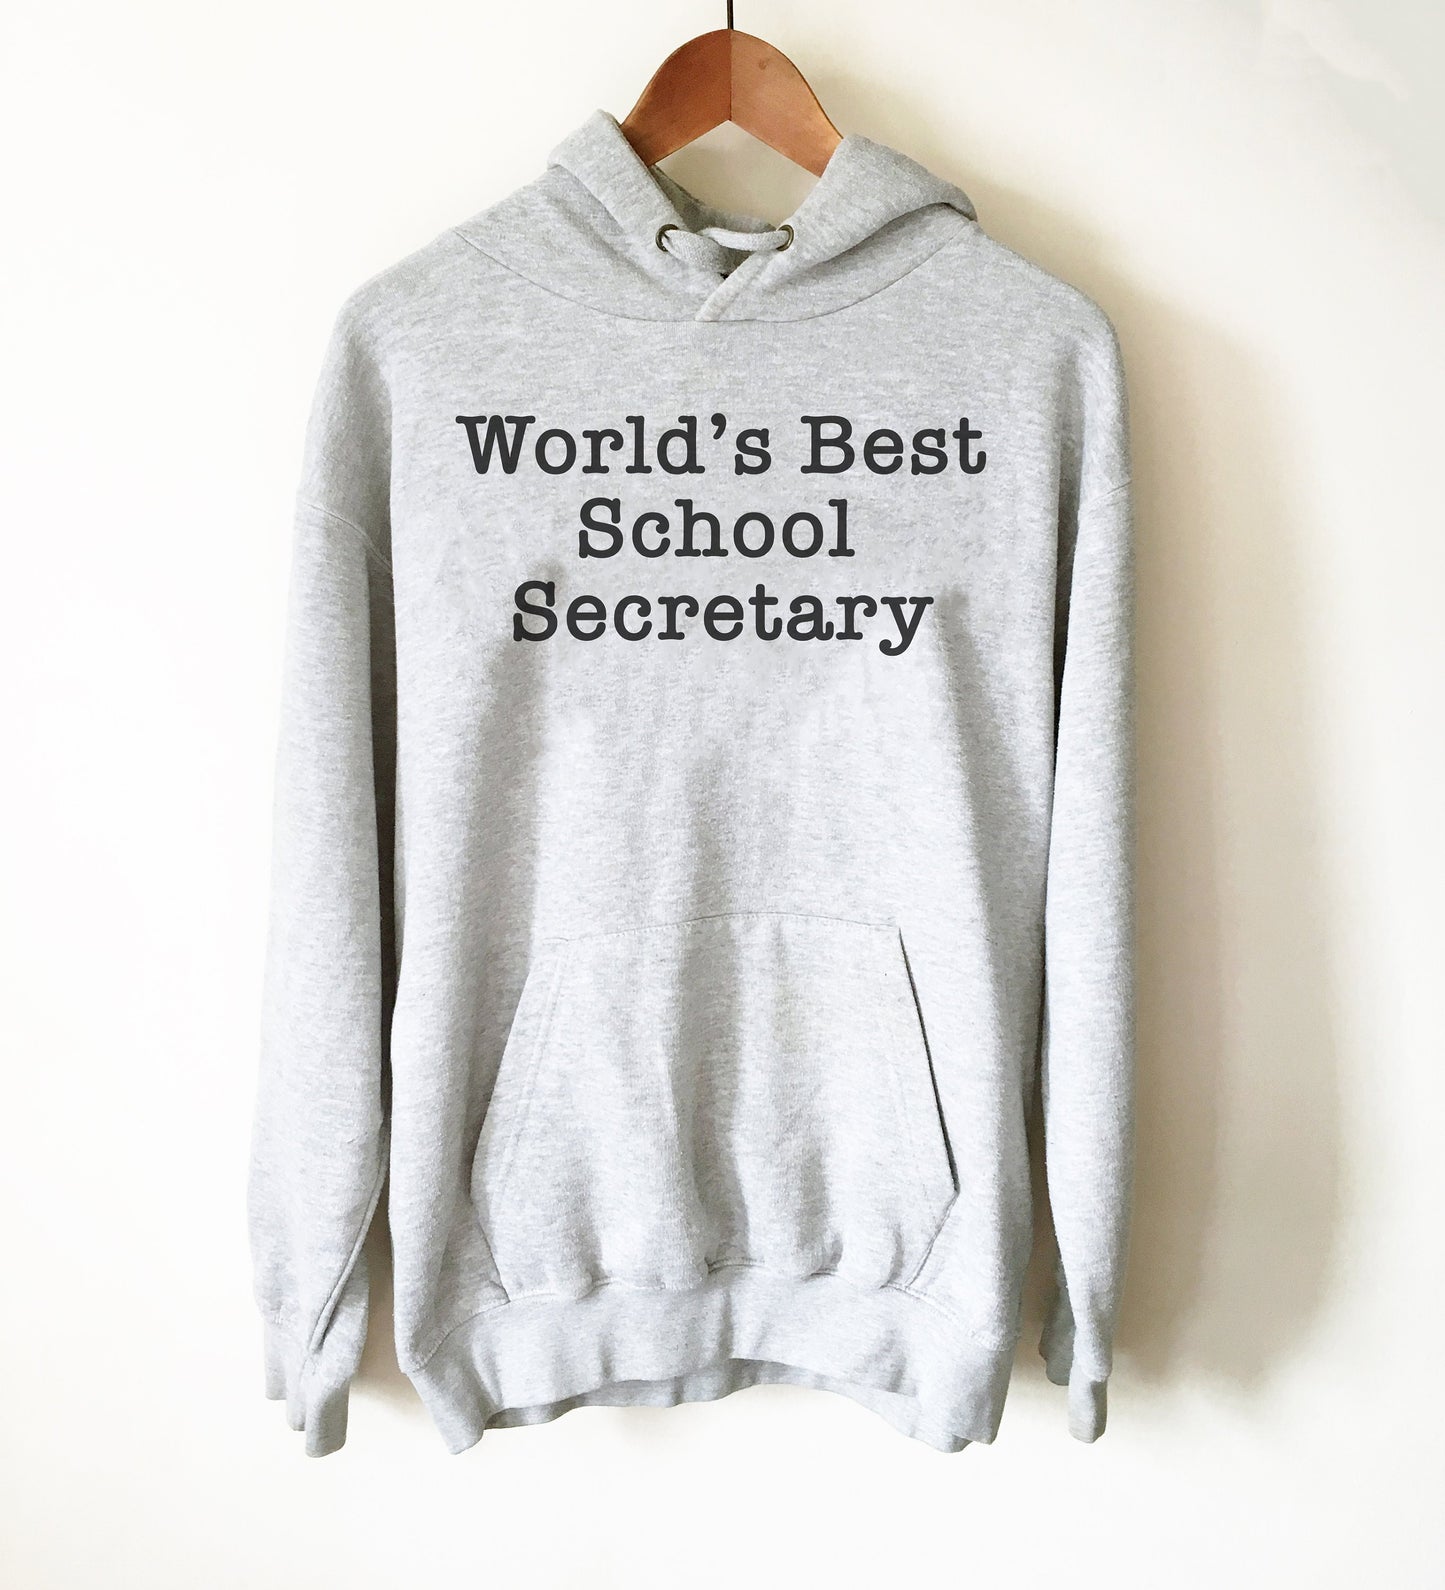 World’s Best School Secretary Hoodie - School Secretary Shirt, School Secretary Gift, Secretary Shirt, End Of School Gift, Back To School